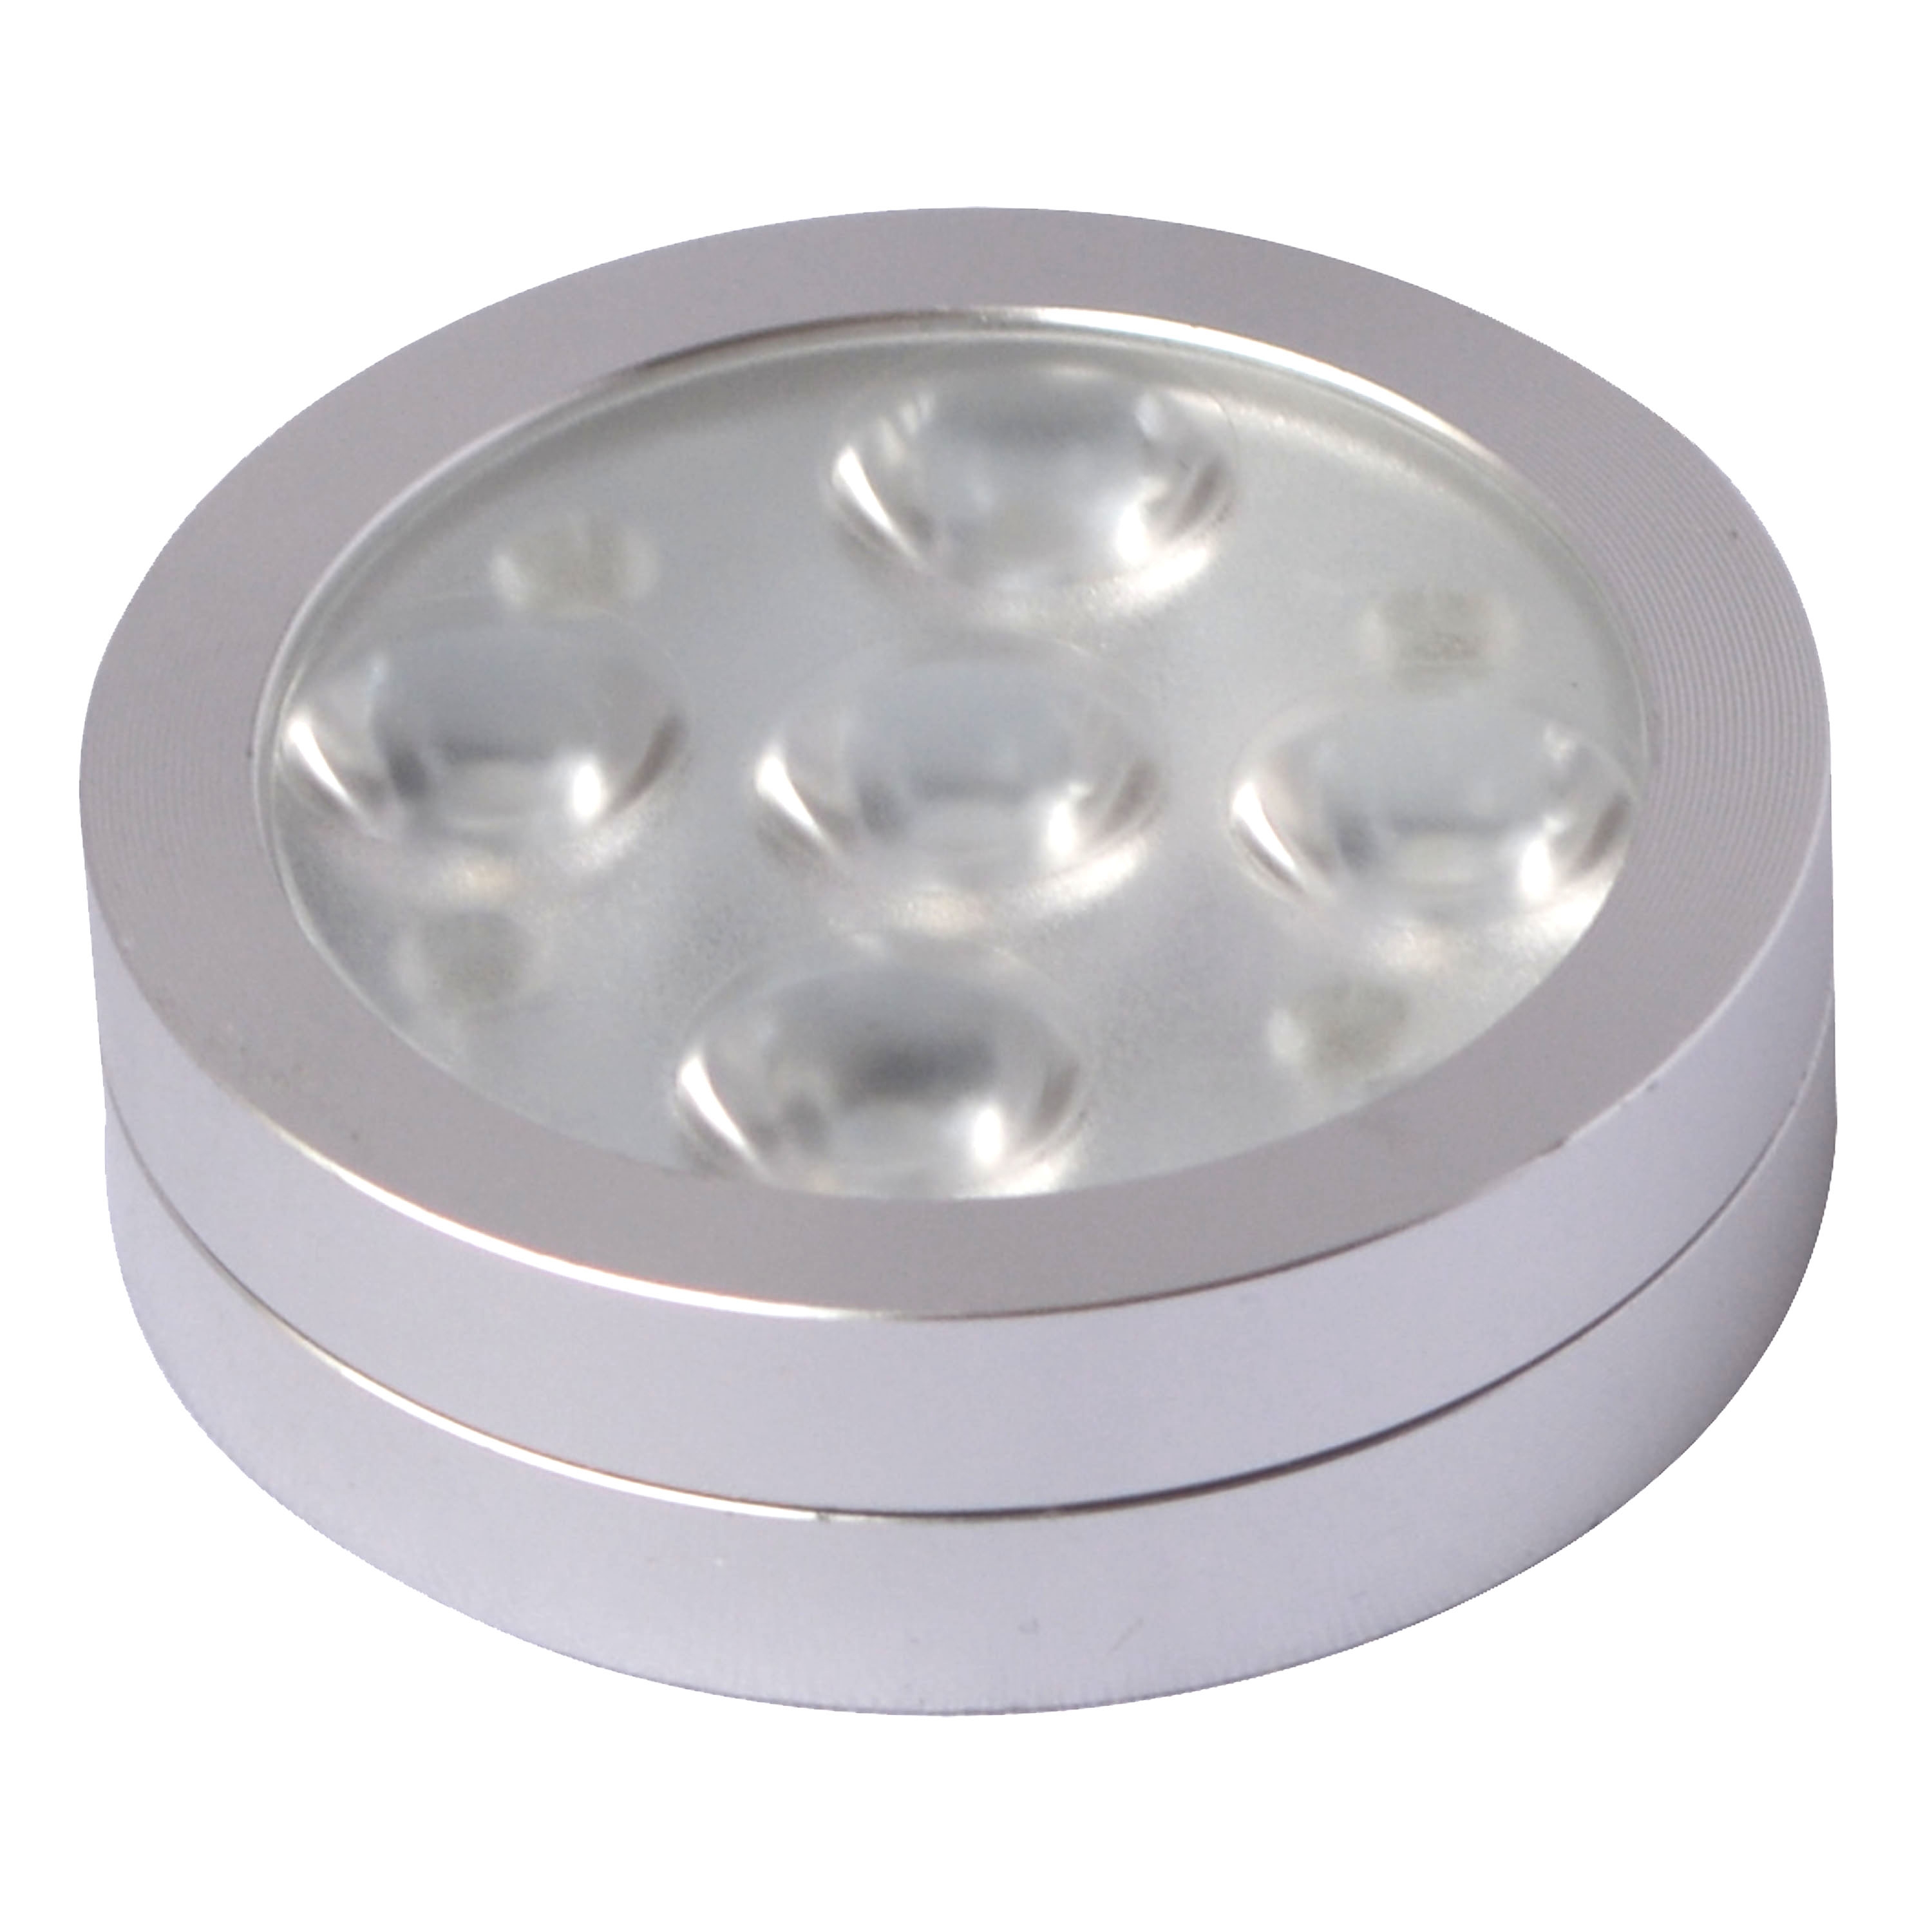 LED under cabinet light factory-Lumiland